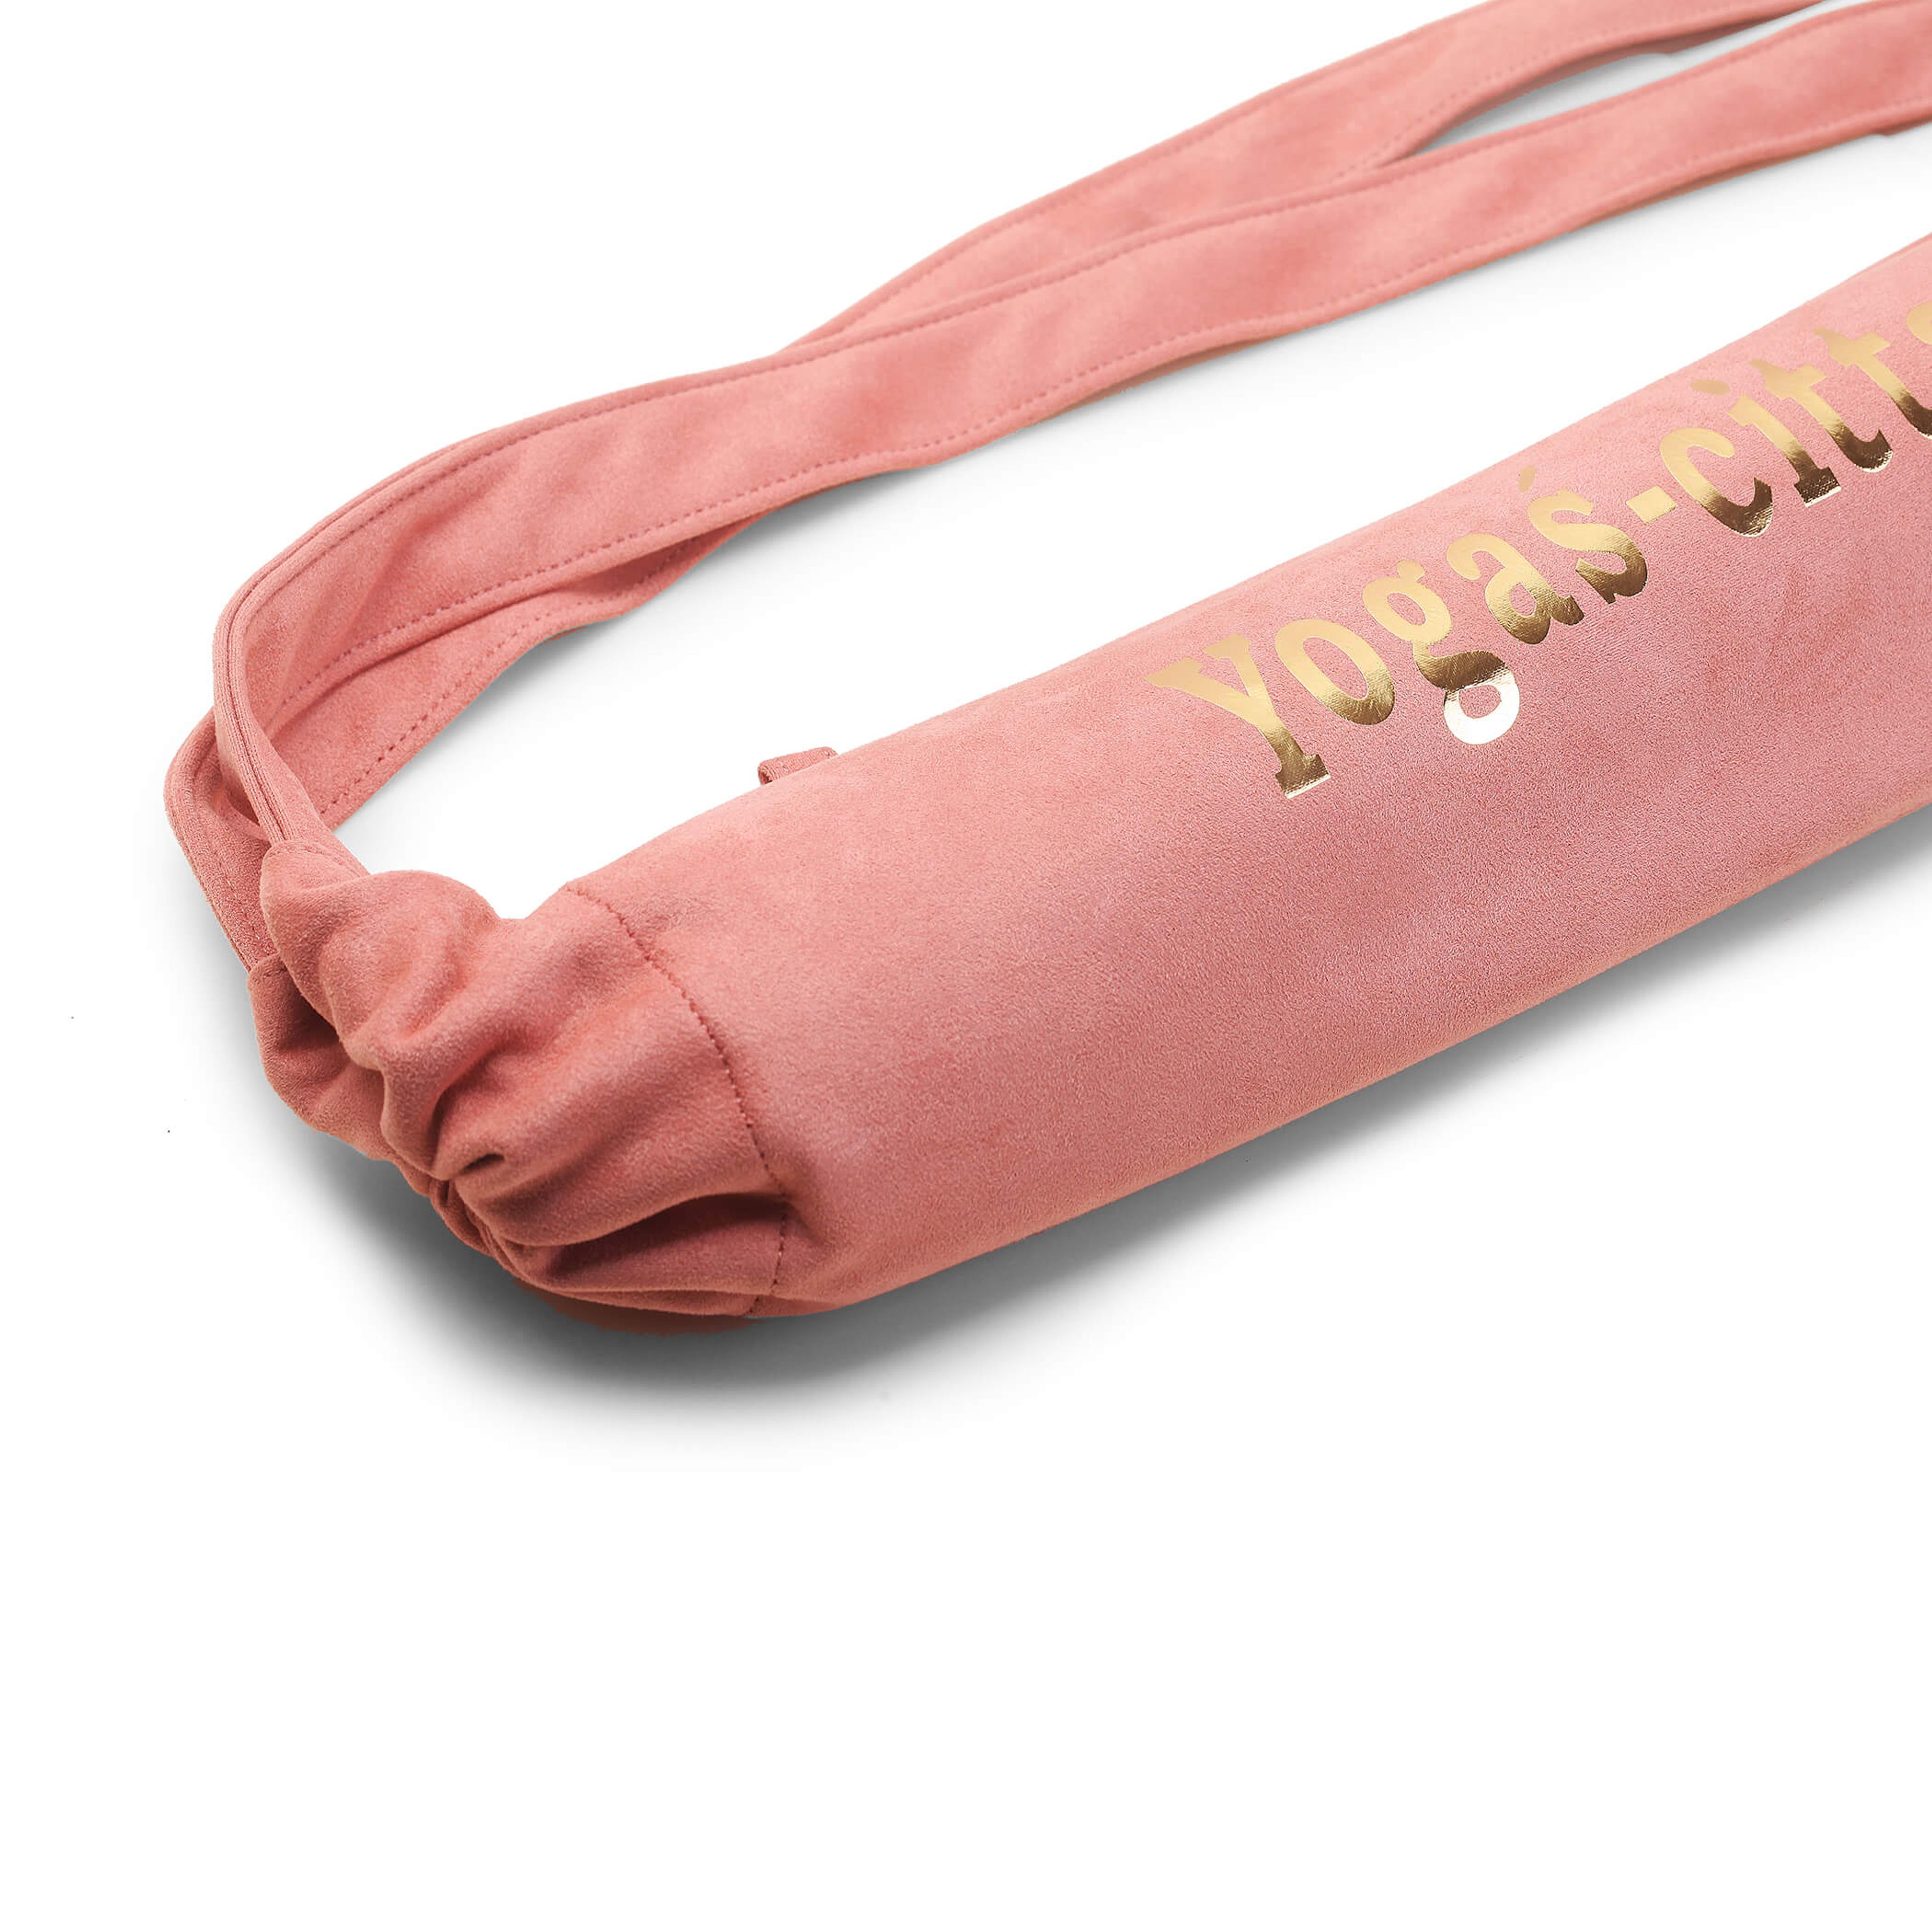 Wiworldandi Yoga Mat Bag - Pink (Travel)